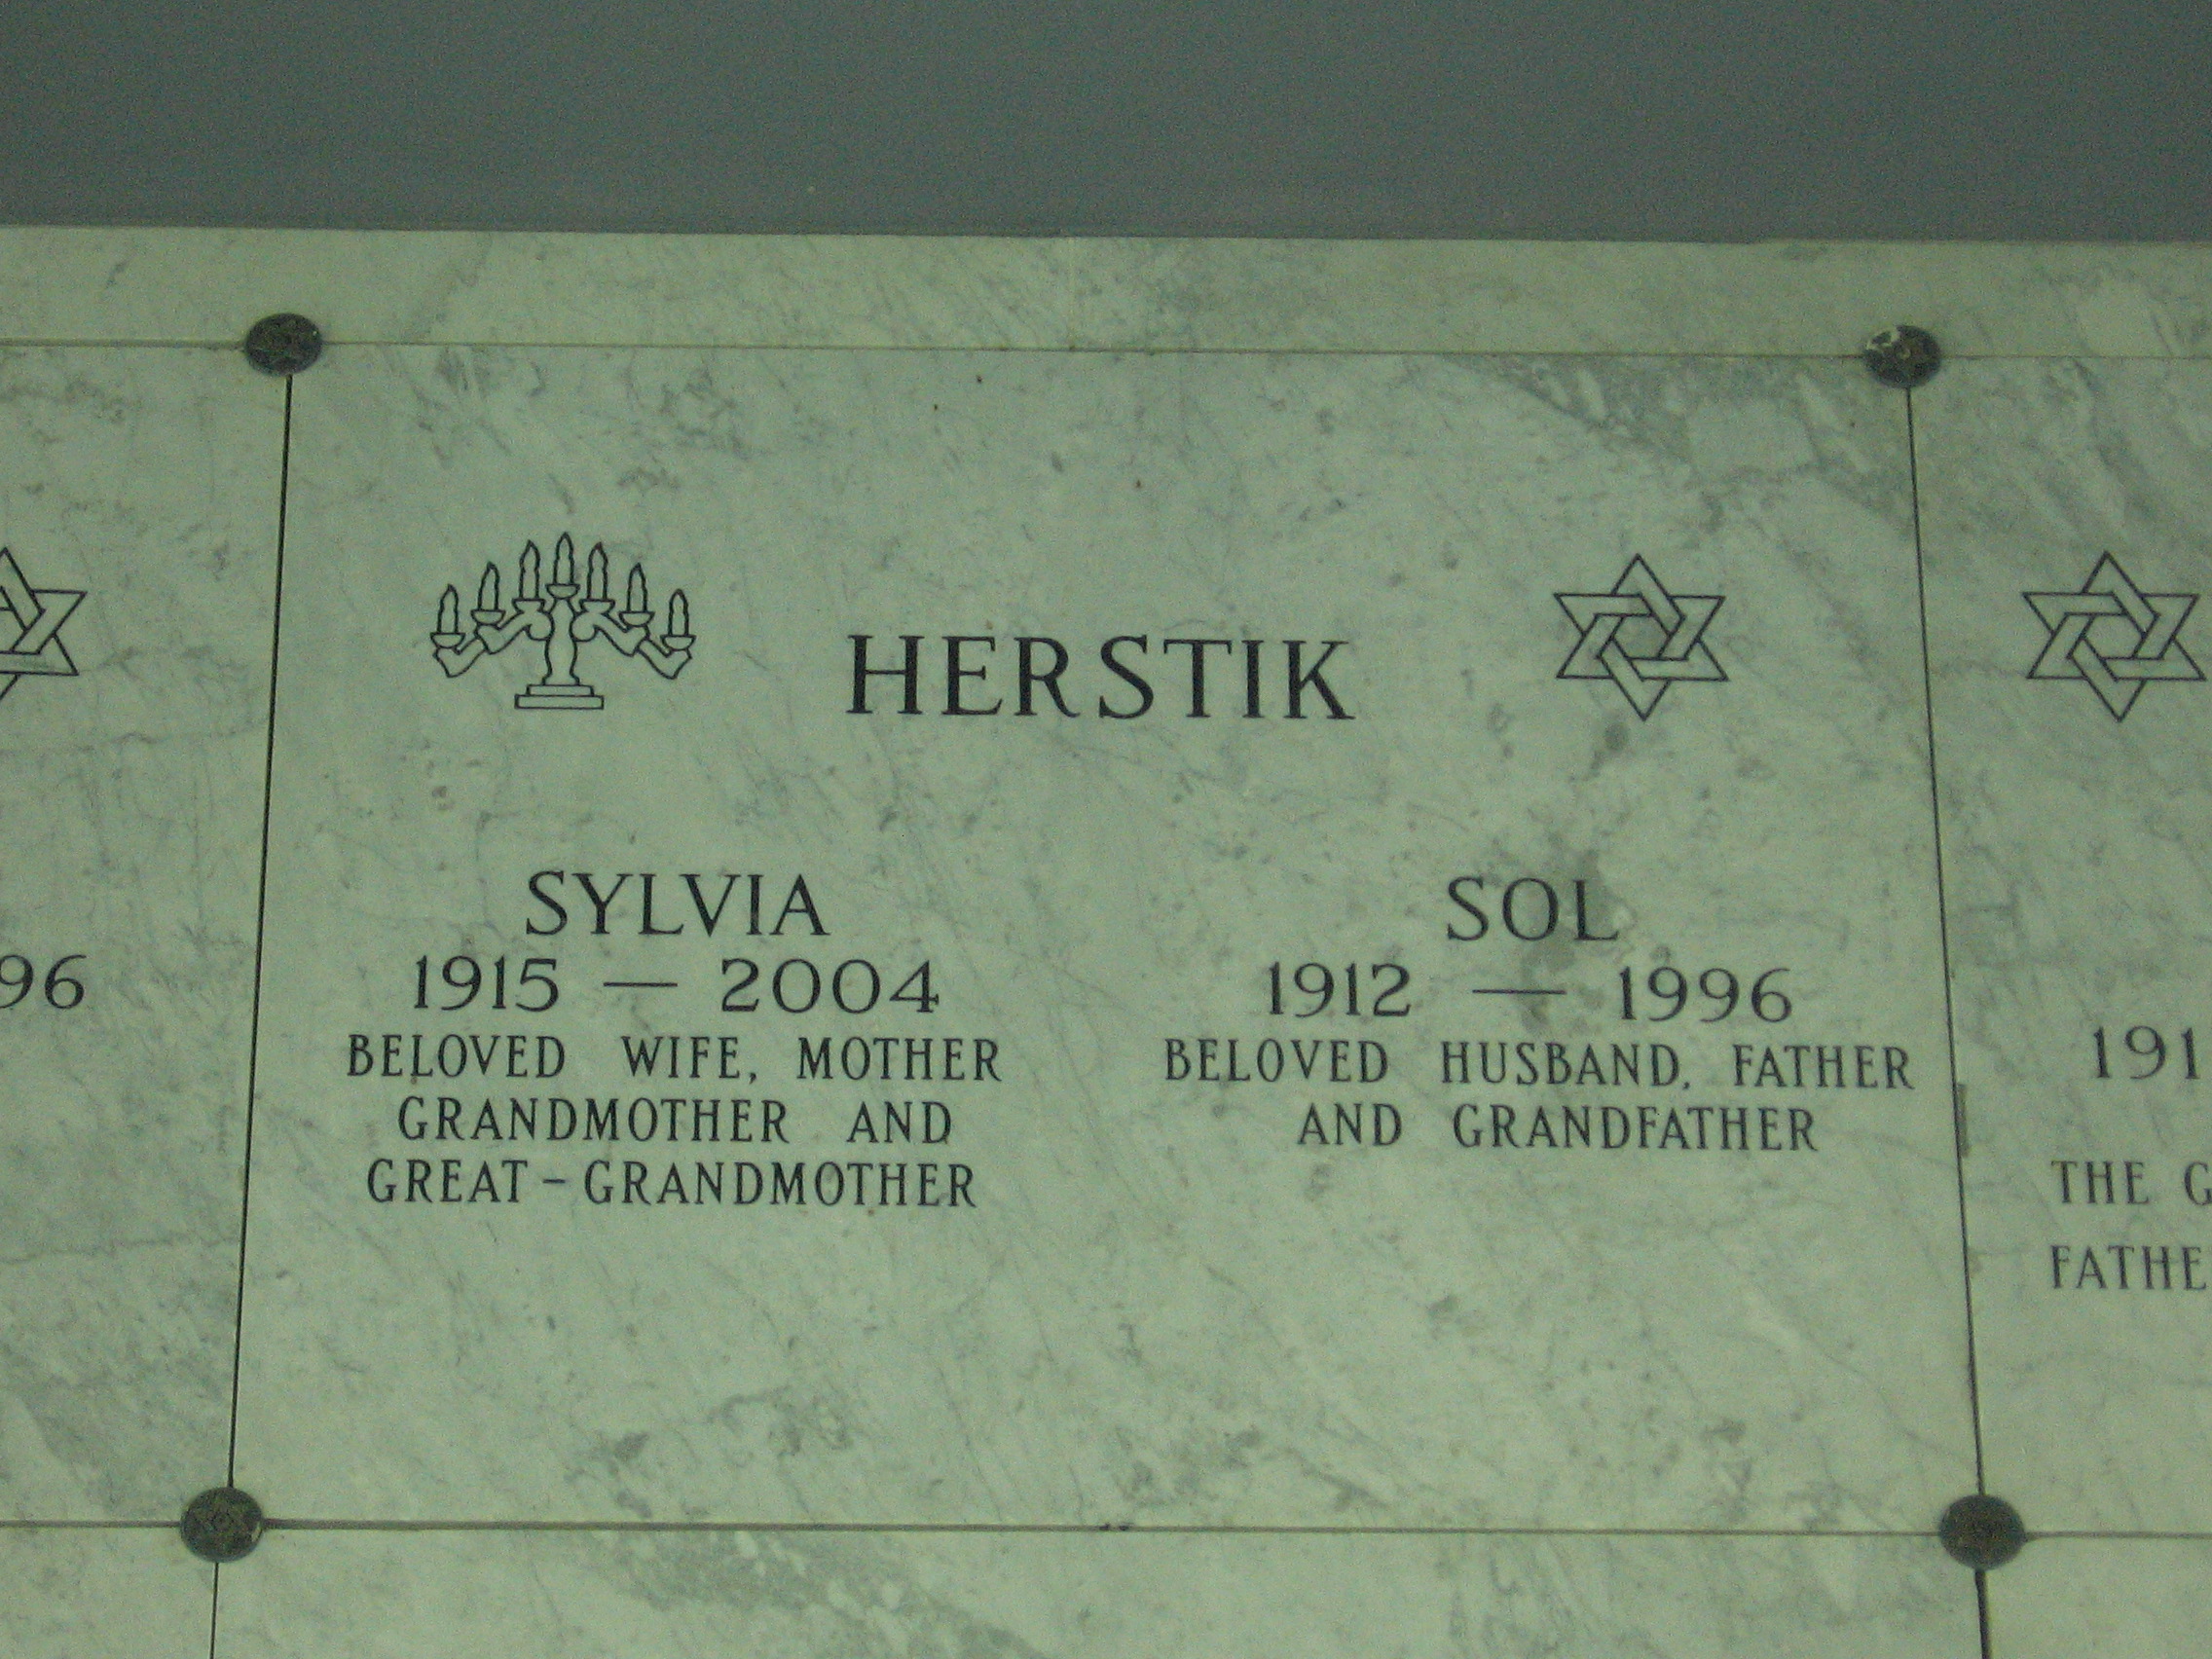 Sylvia Herstik